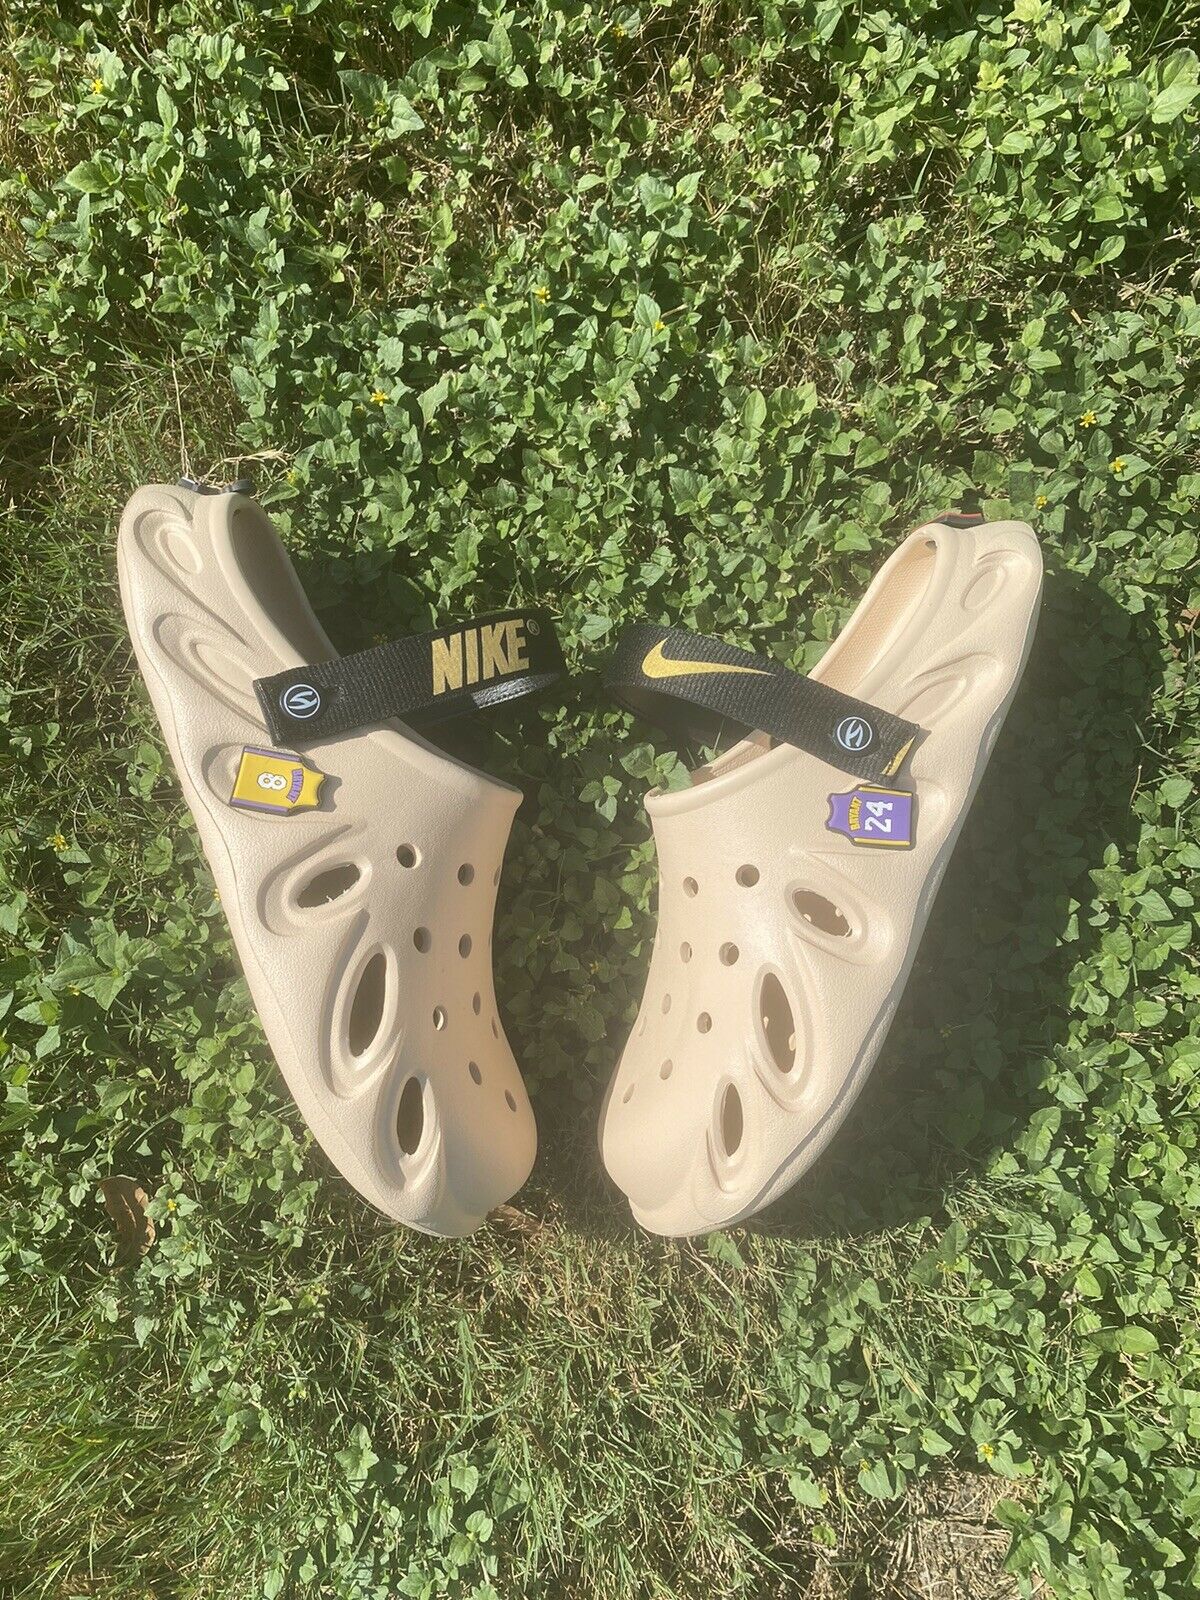 Nike Clog (croc ) straps STRAPS ONLY